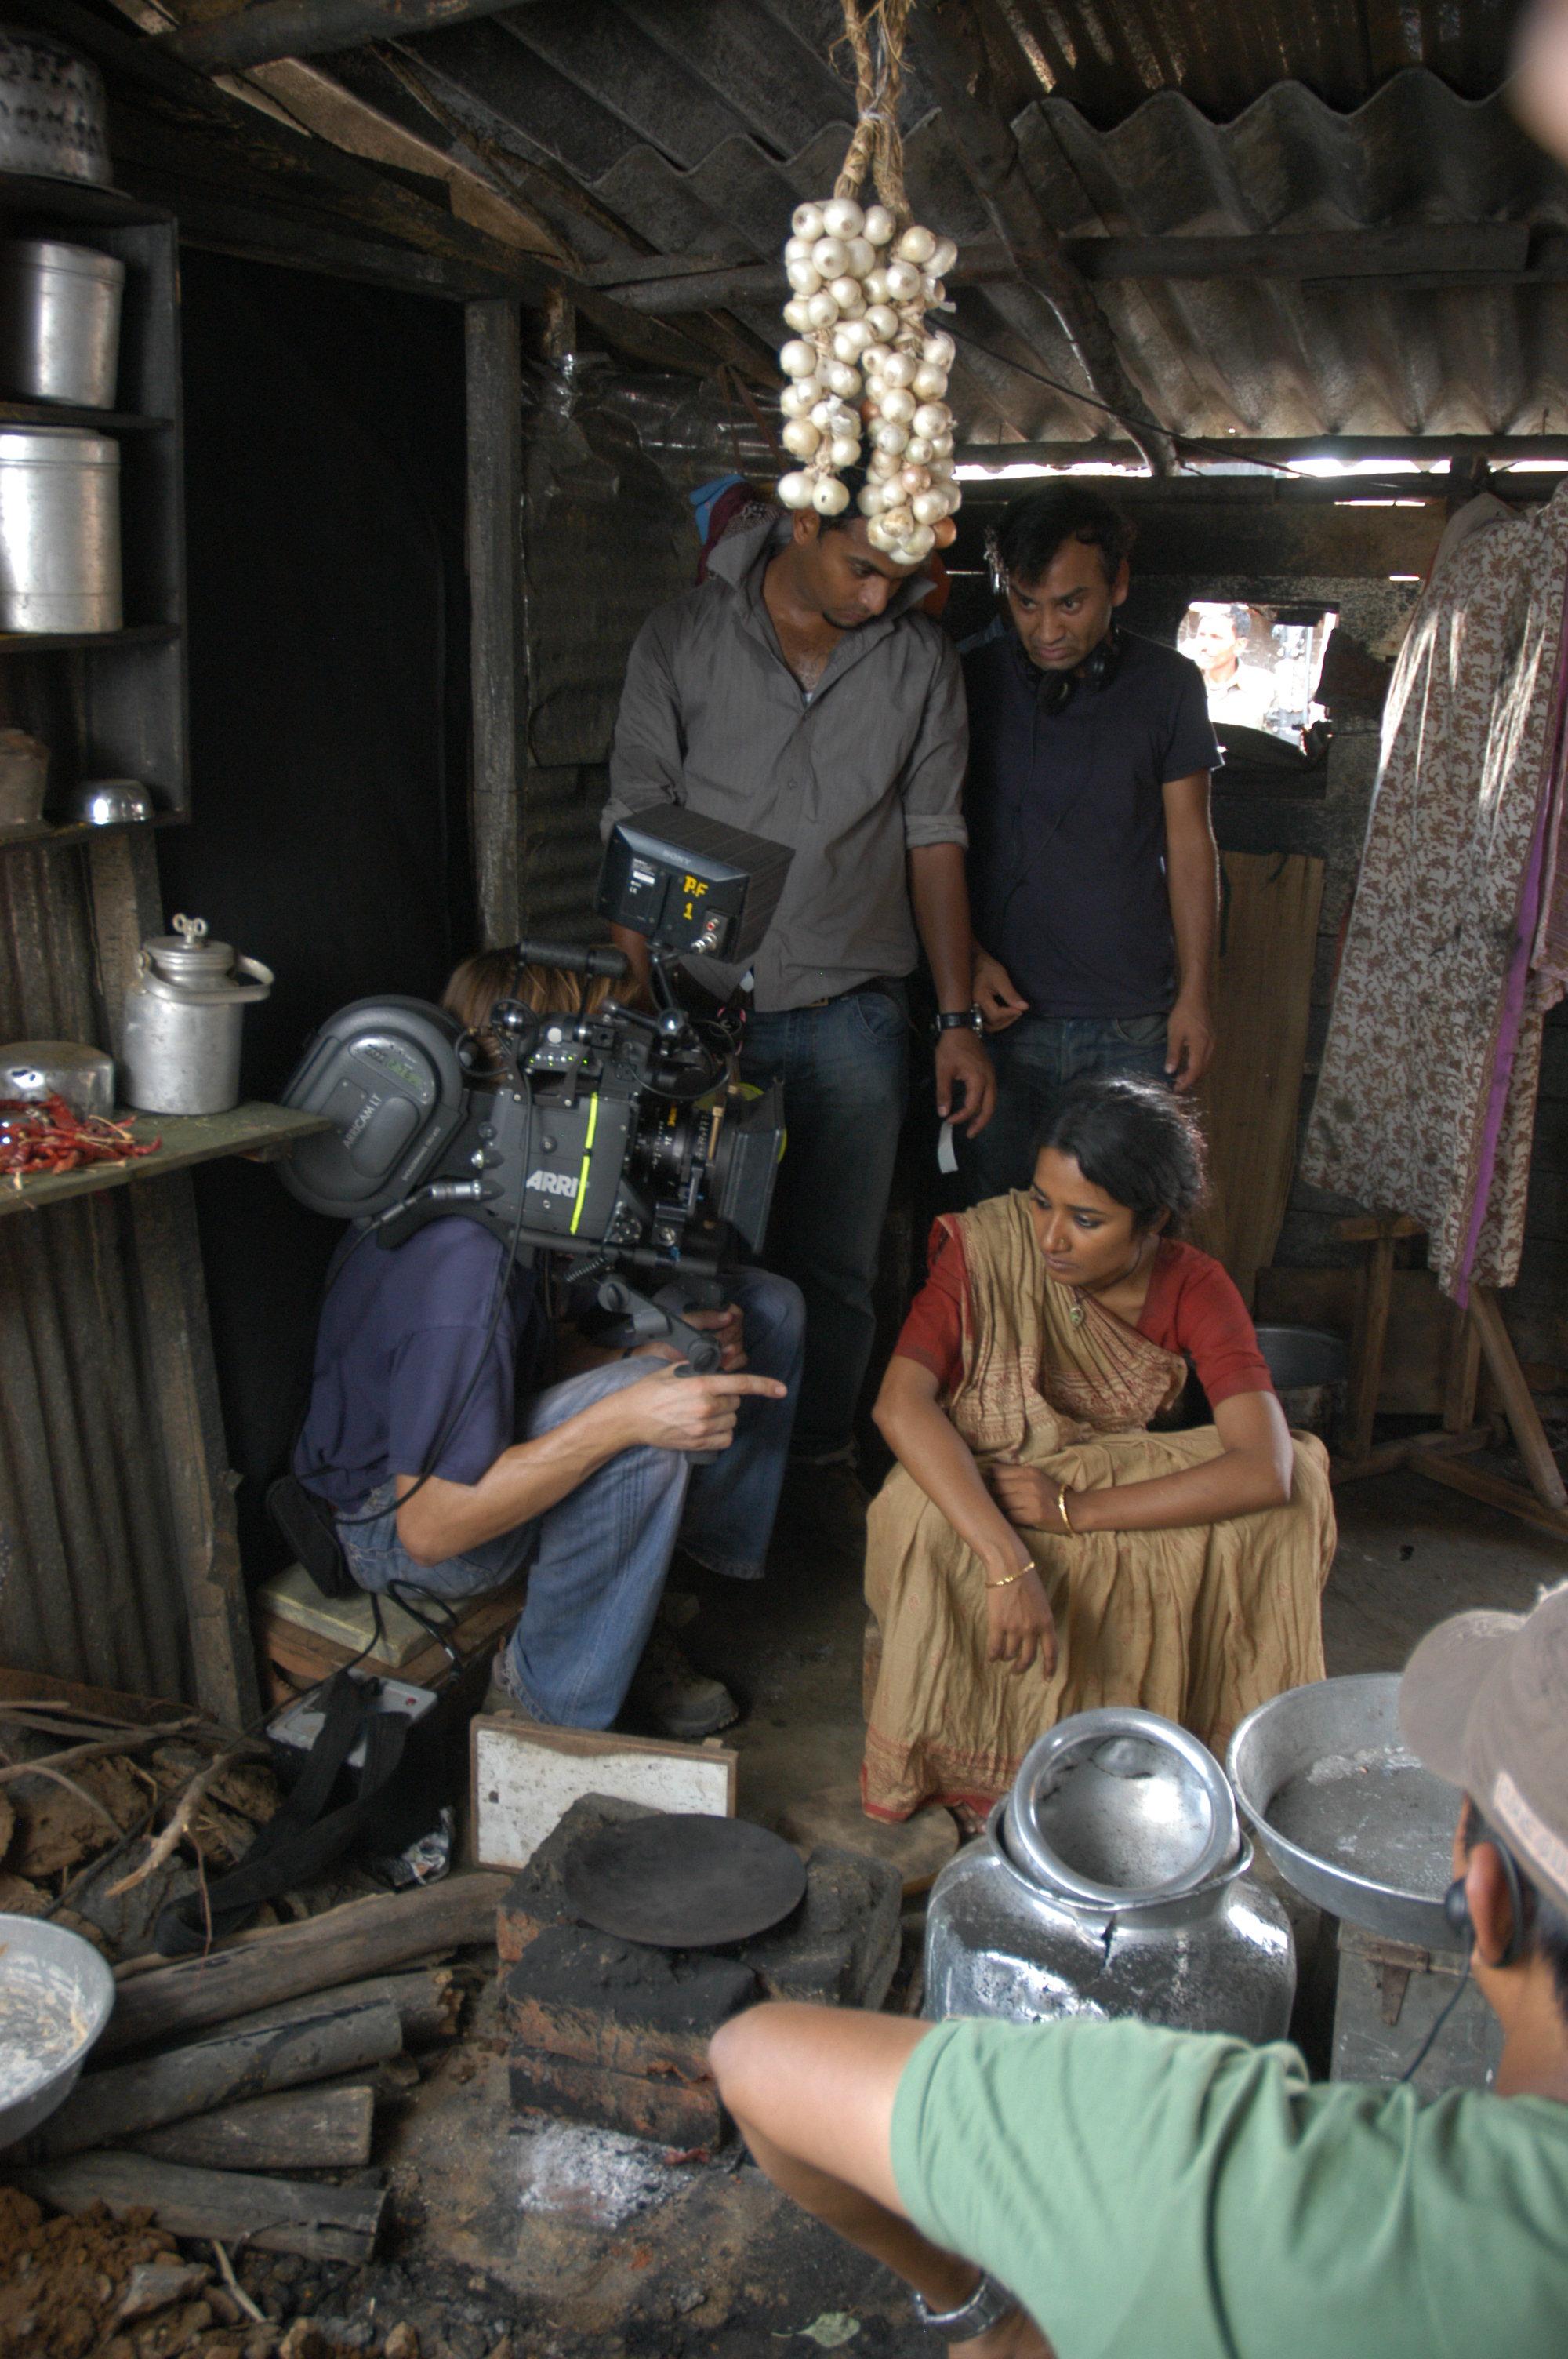 Tannishtha Chatterjee in Bhopal: A Prayer for Rain (2014)